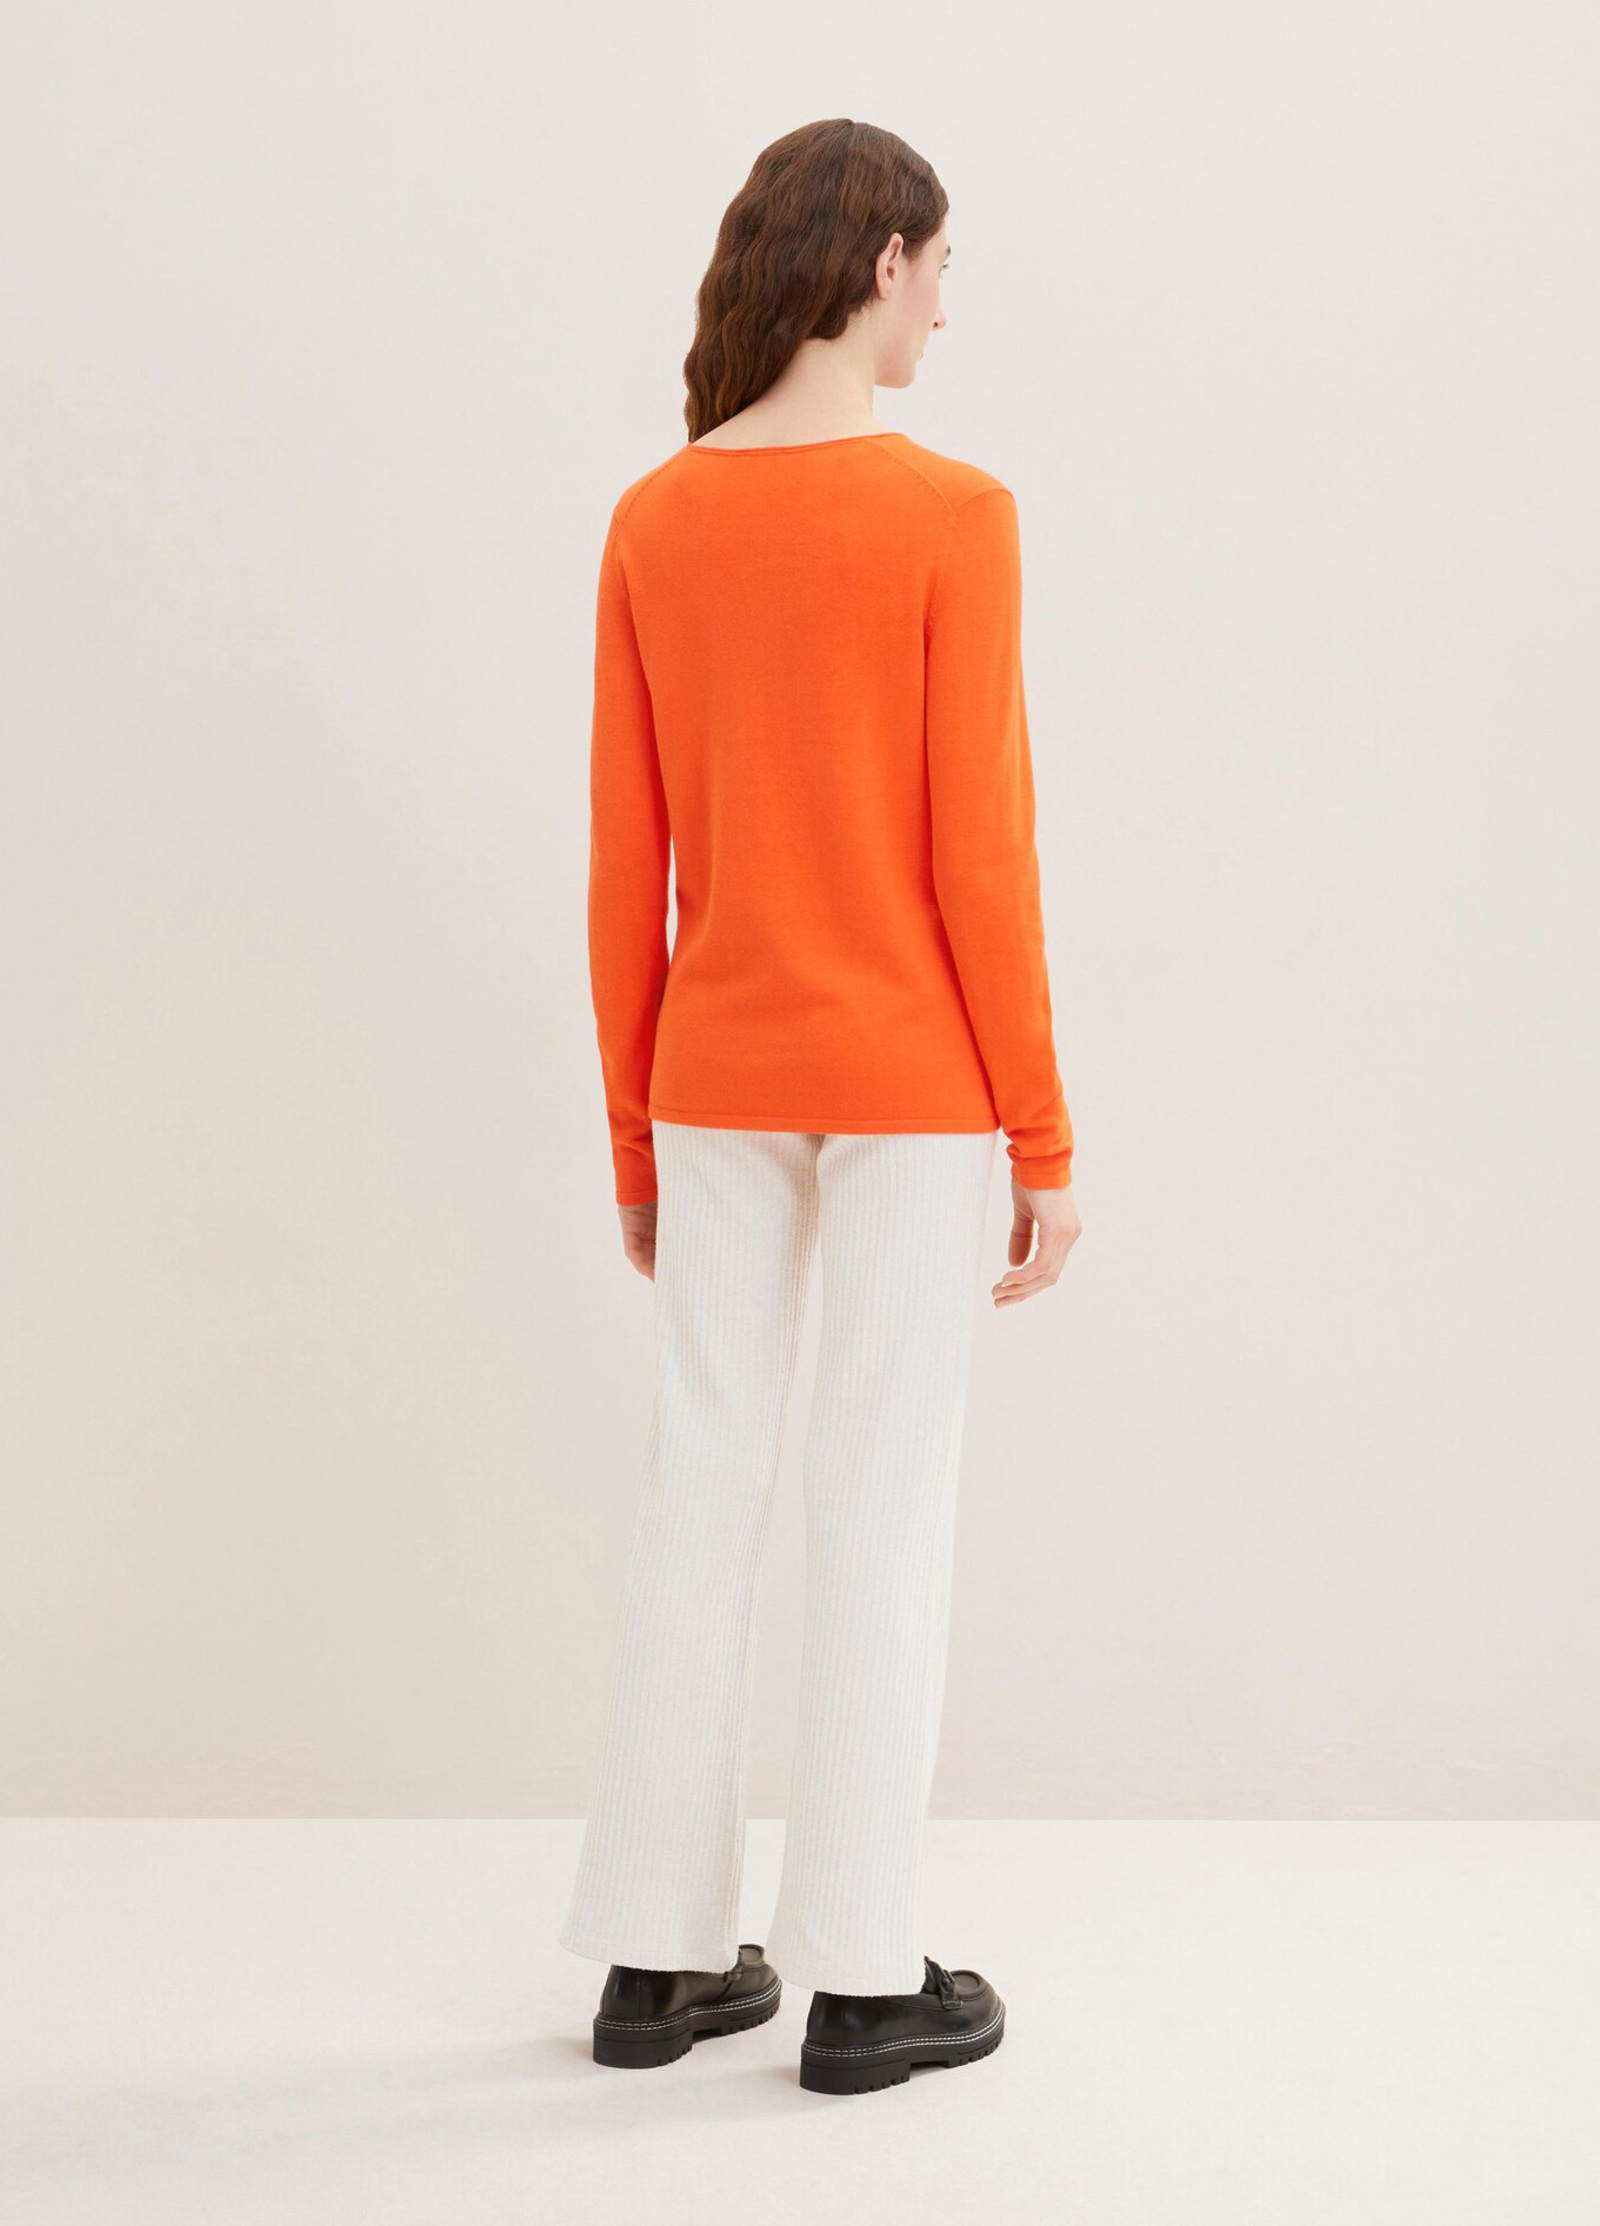 V-neck - Tom Red Fever Tailor® L Size Sweater Basic